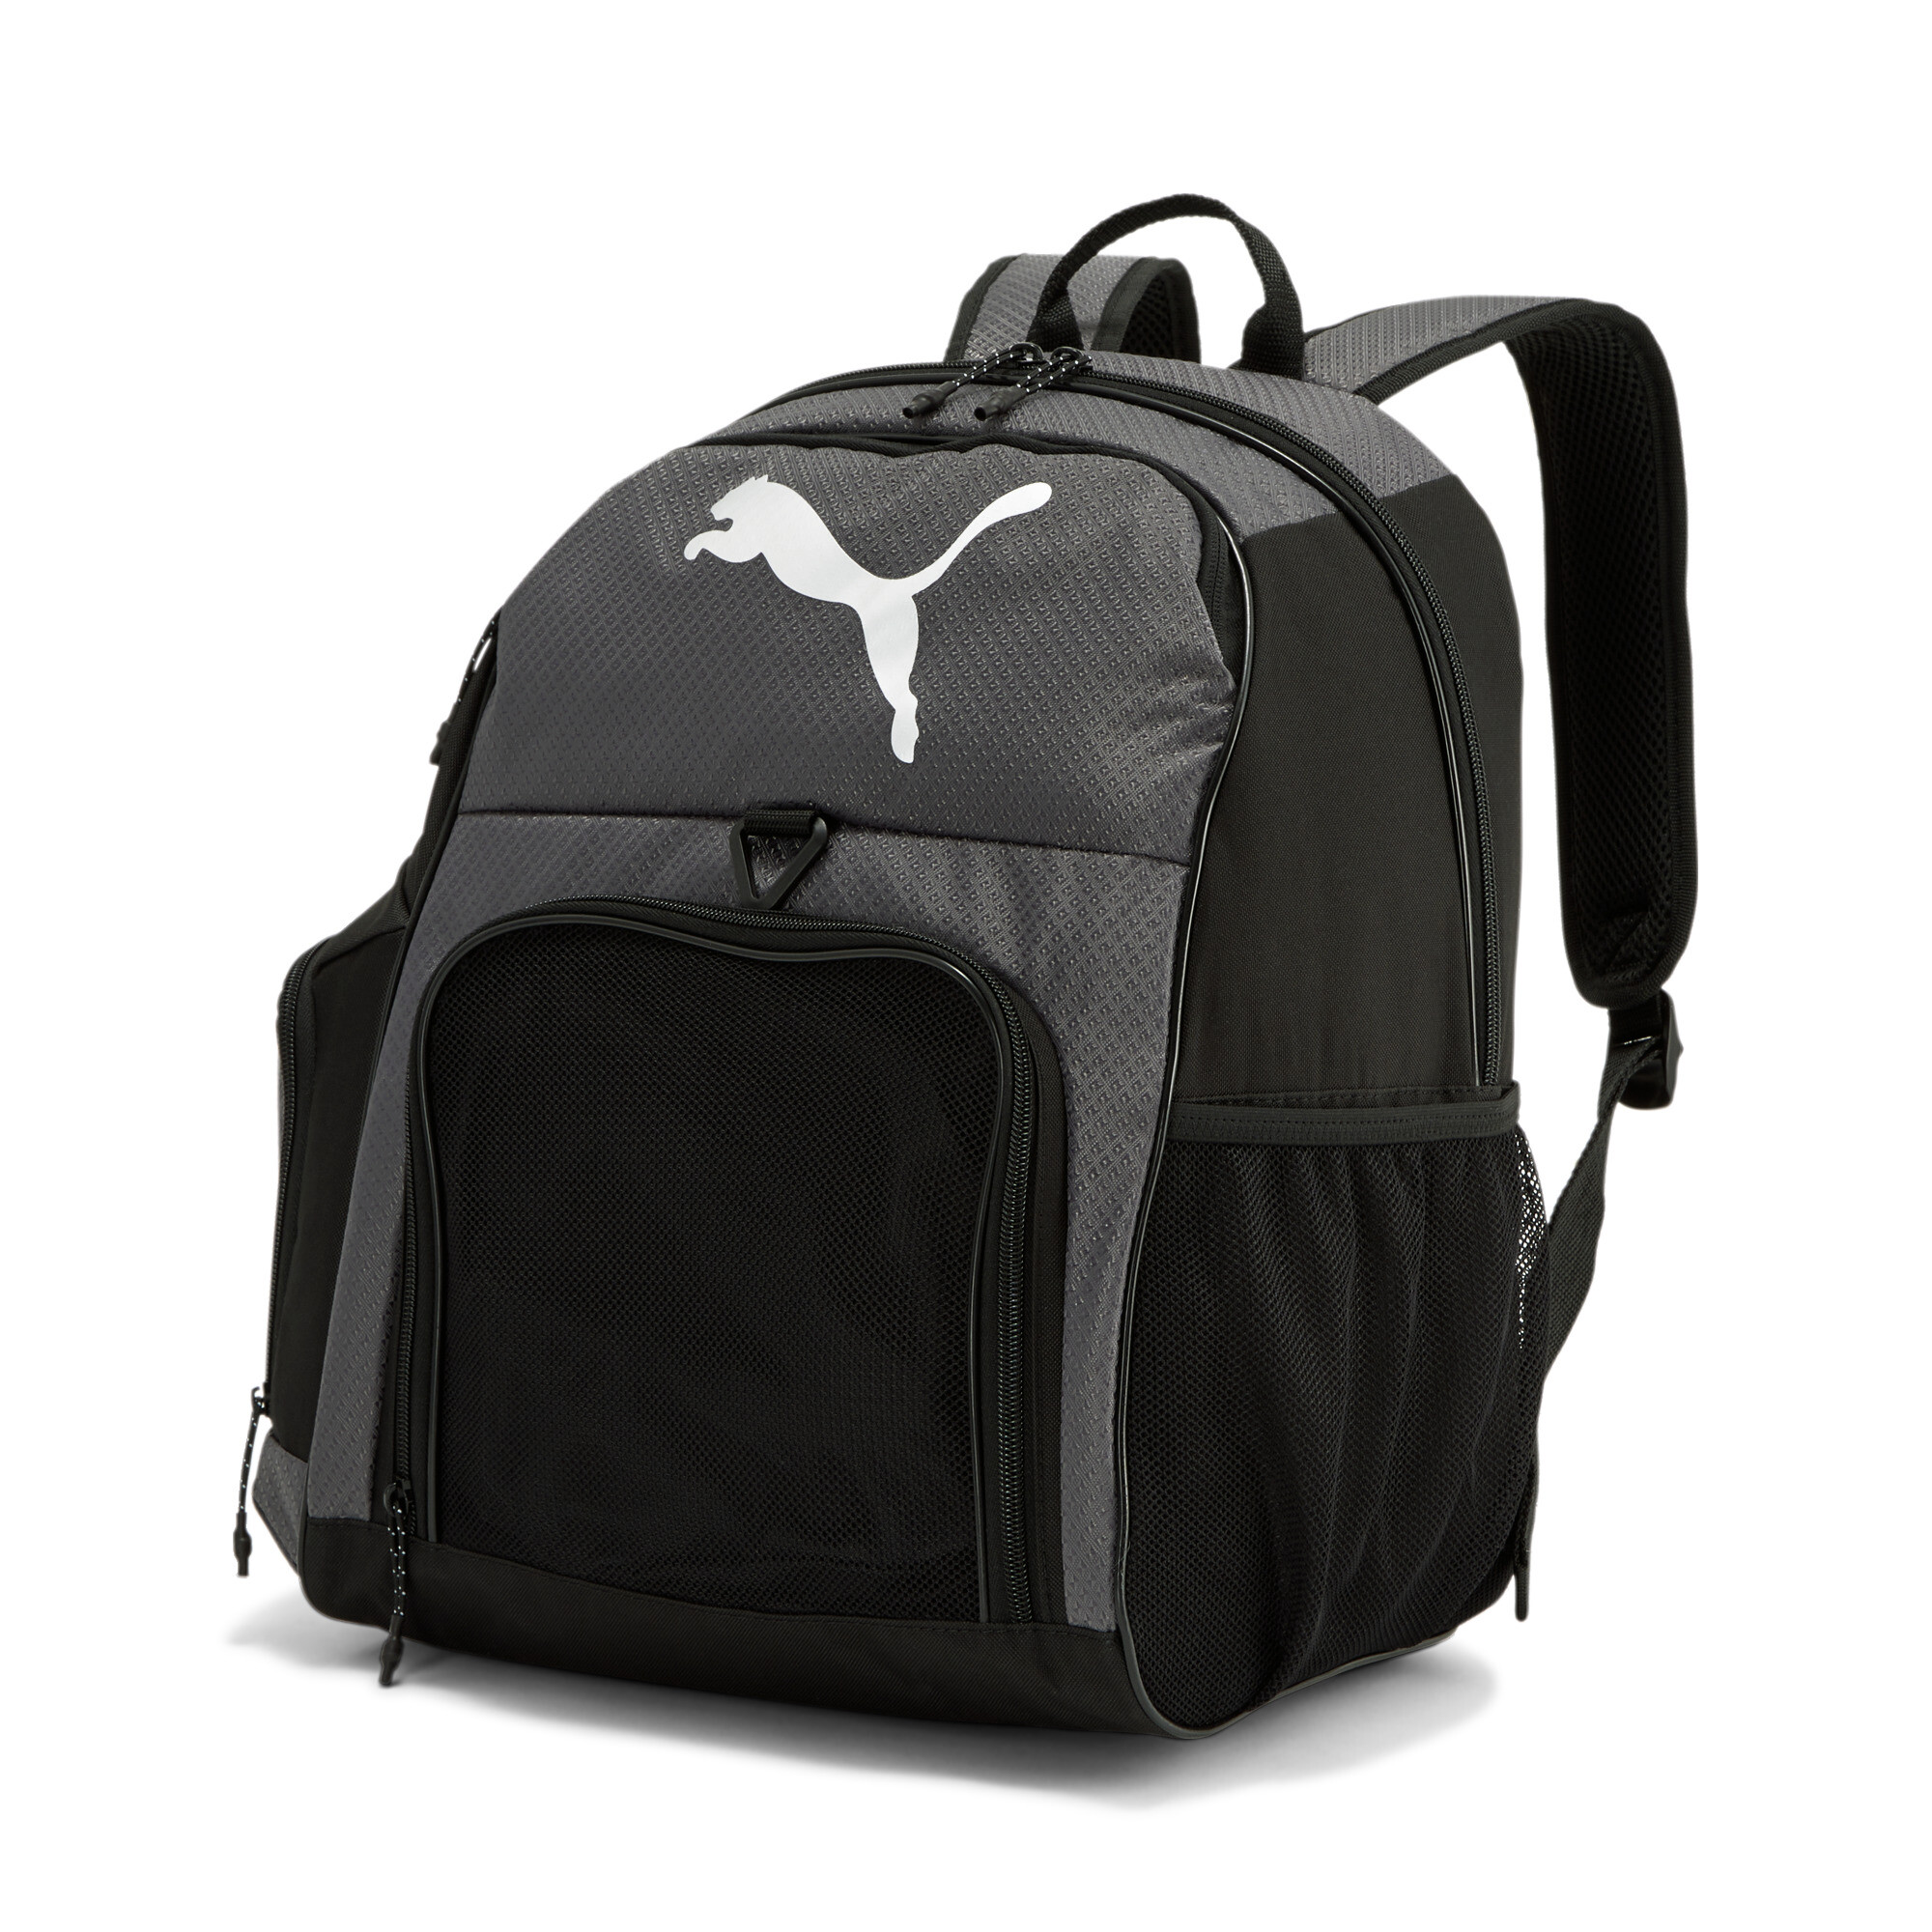 | Hat Trick Basketball eBay PUMA Backpack Unisex